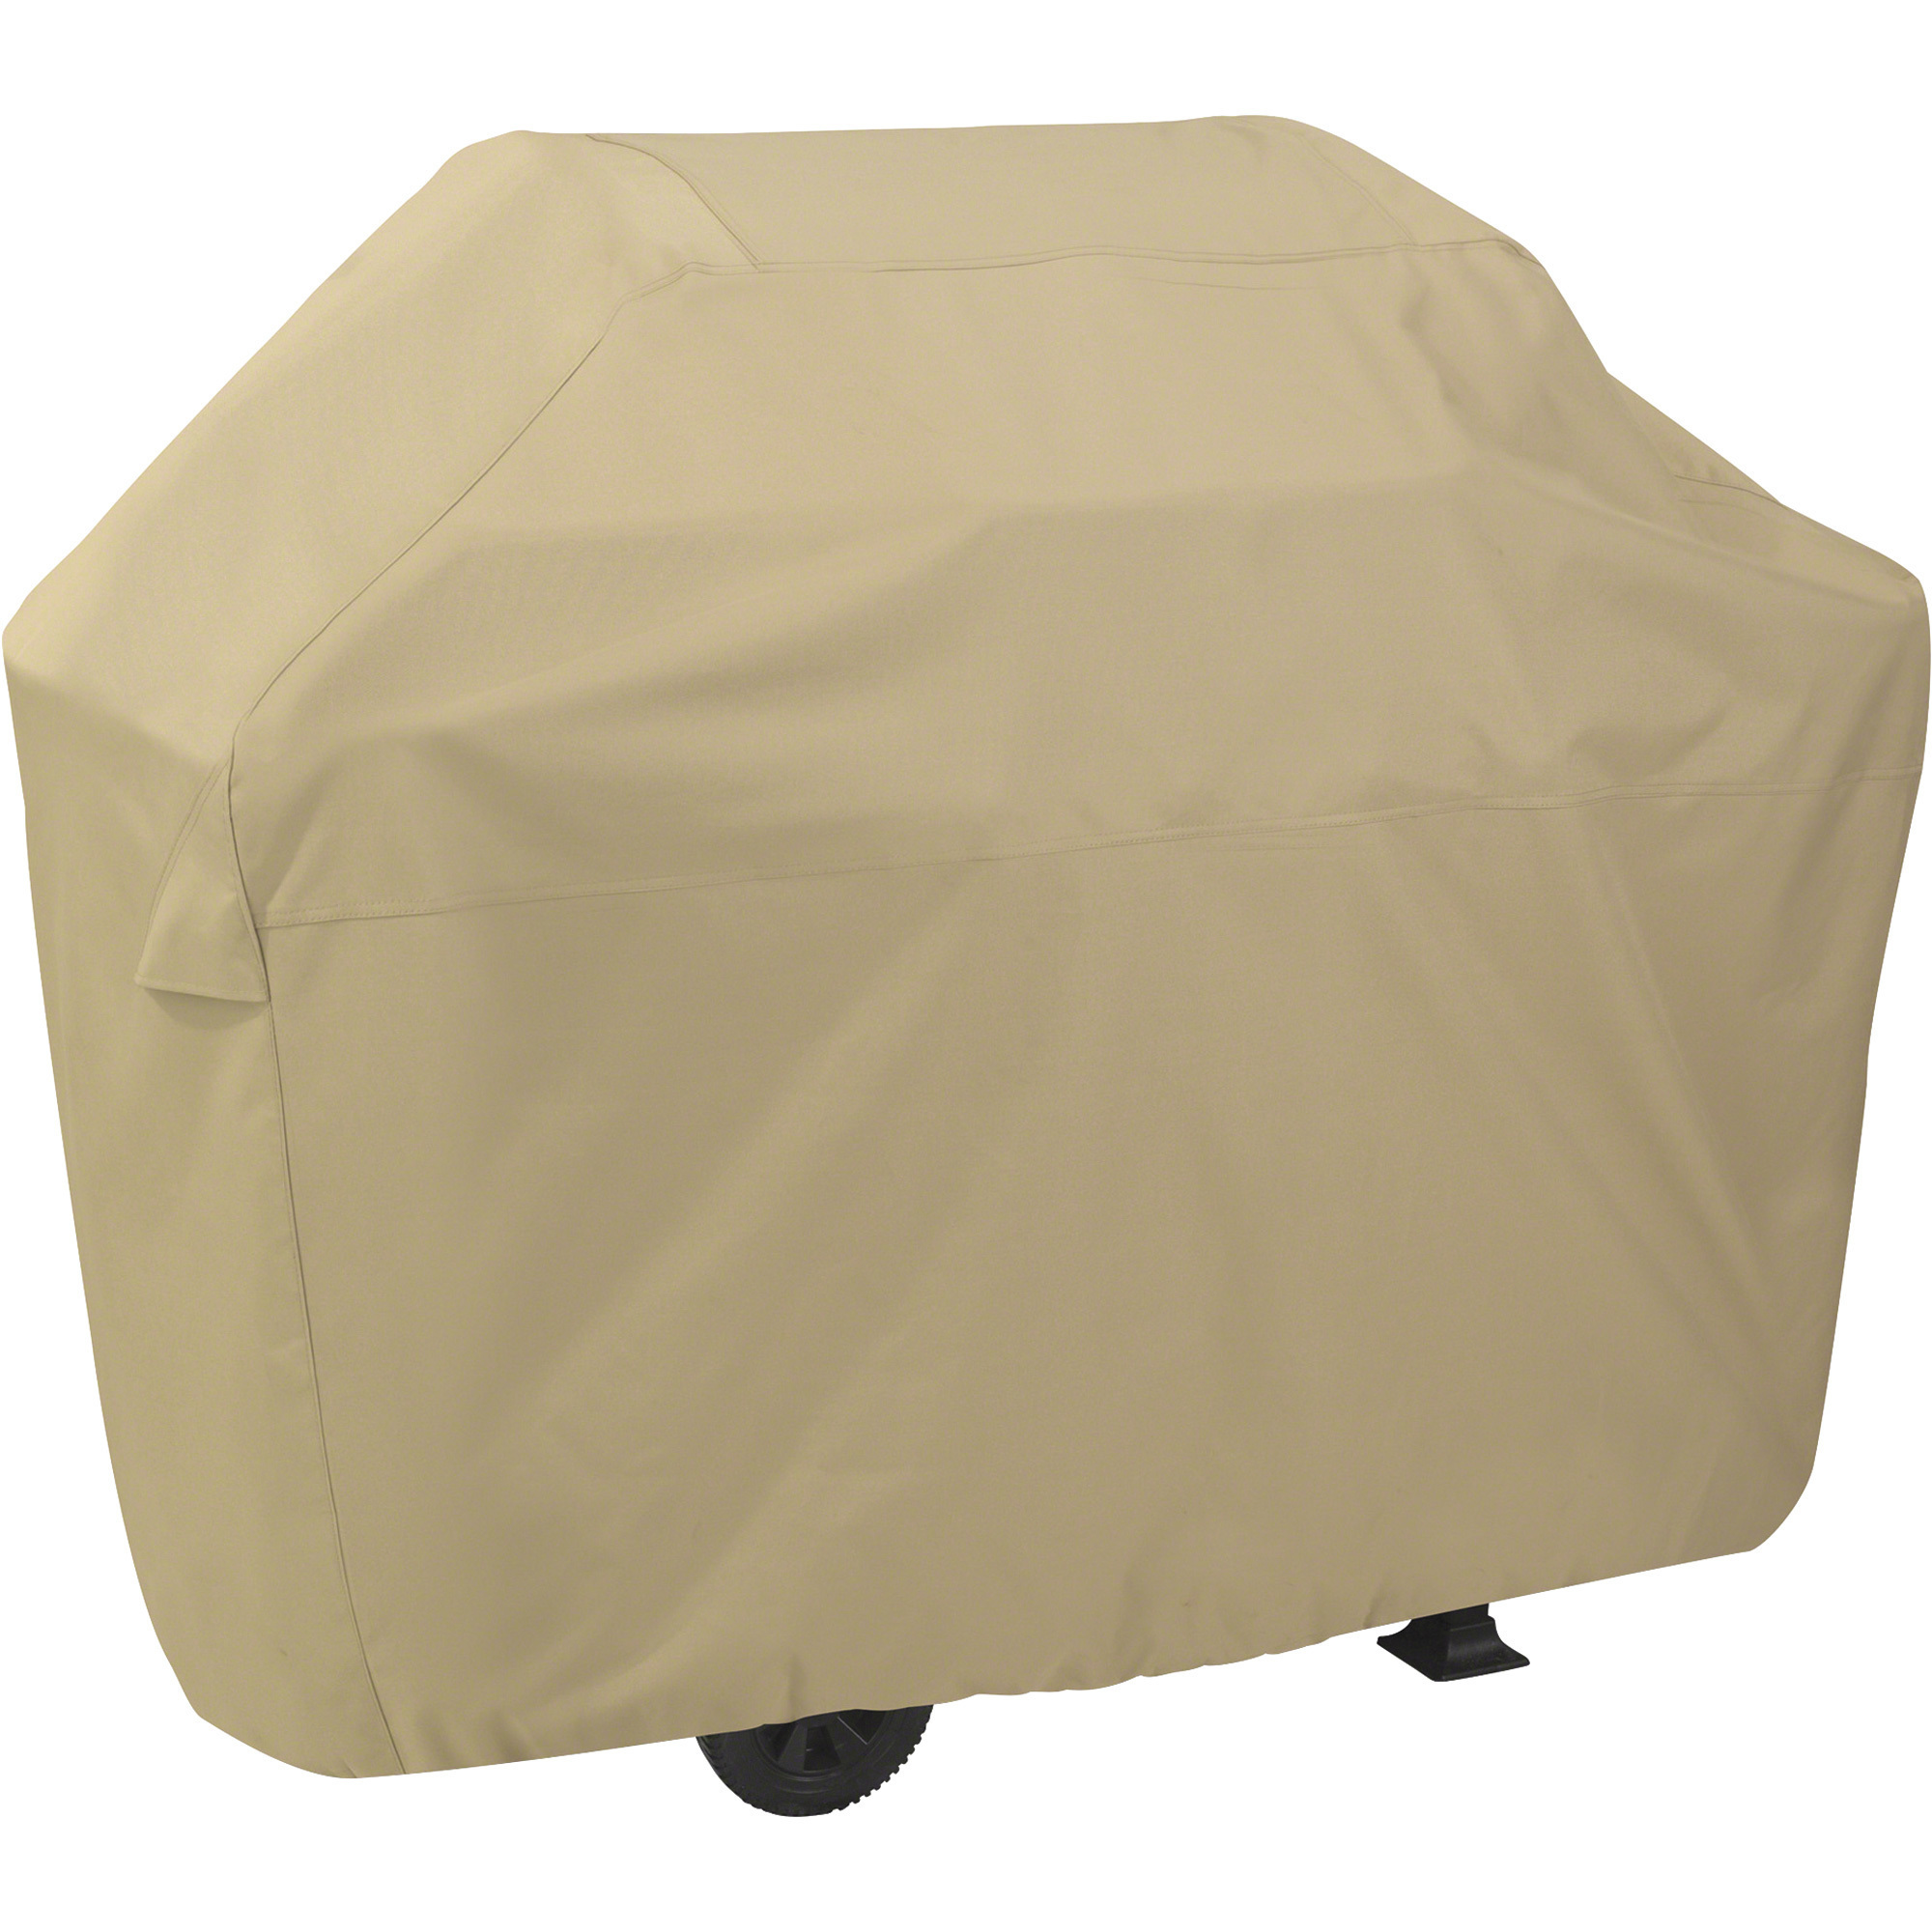 Classic Accessories Terrazzo Cart BBQ Cover, Large, Sand, 64Inch L x 24Inch D x 48Inch H, Model 53922